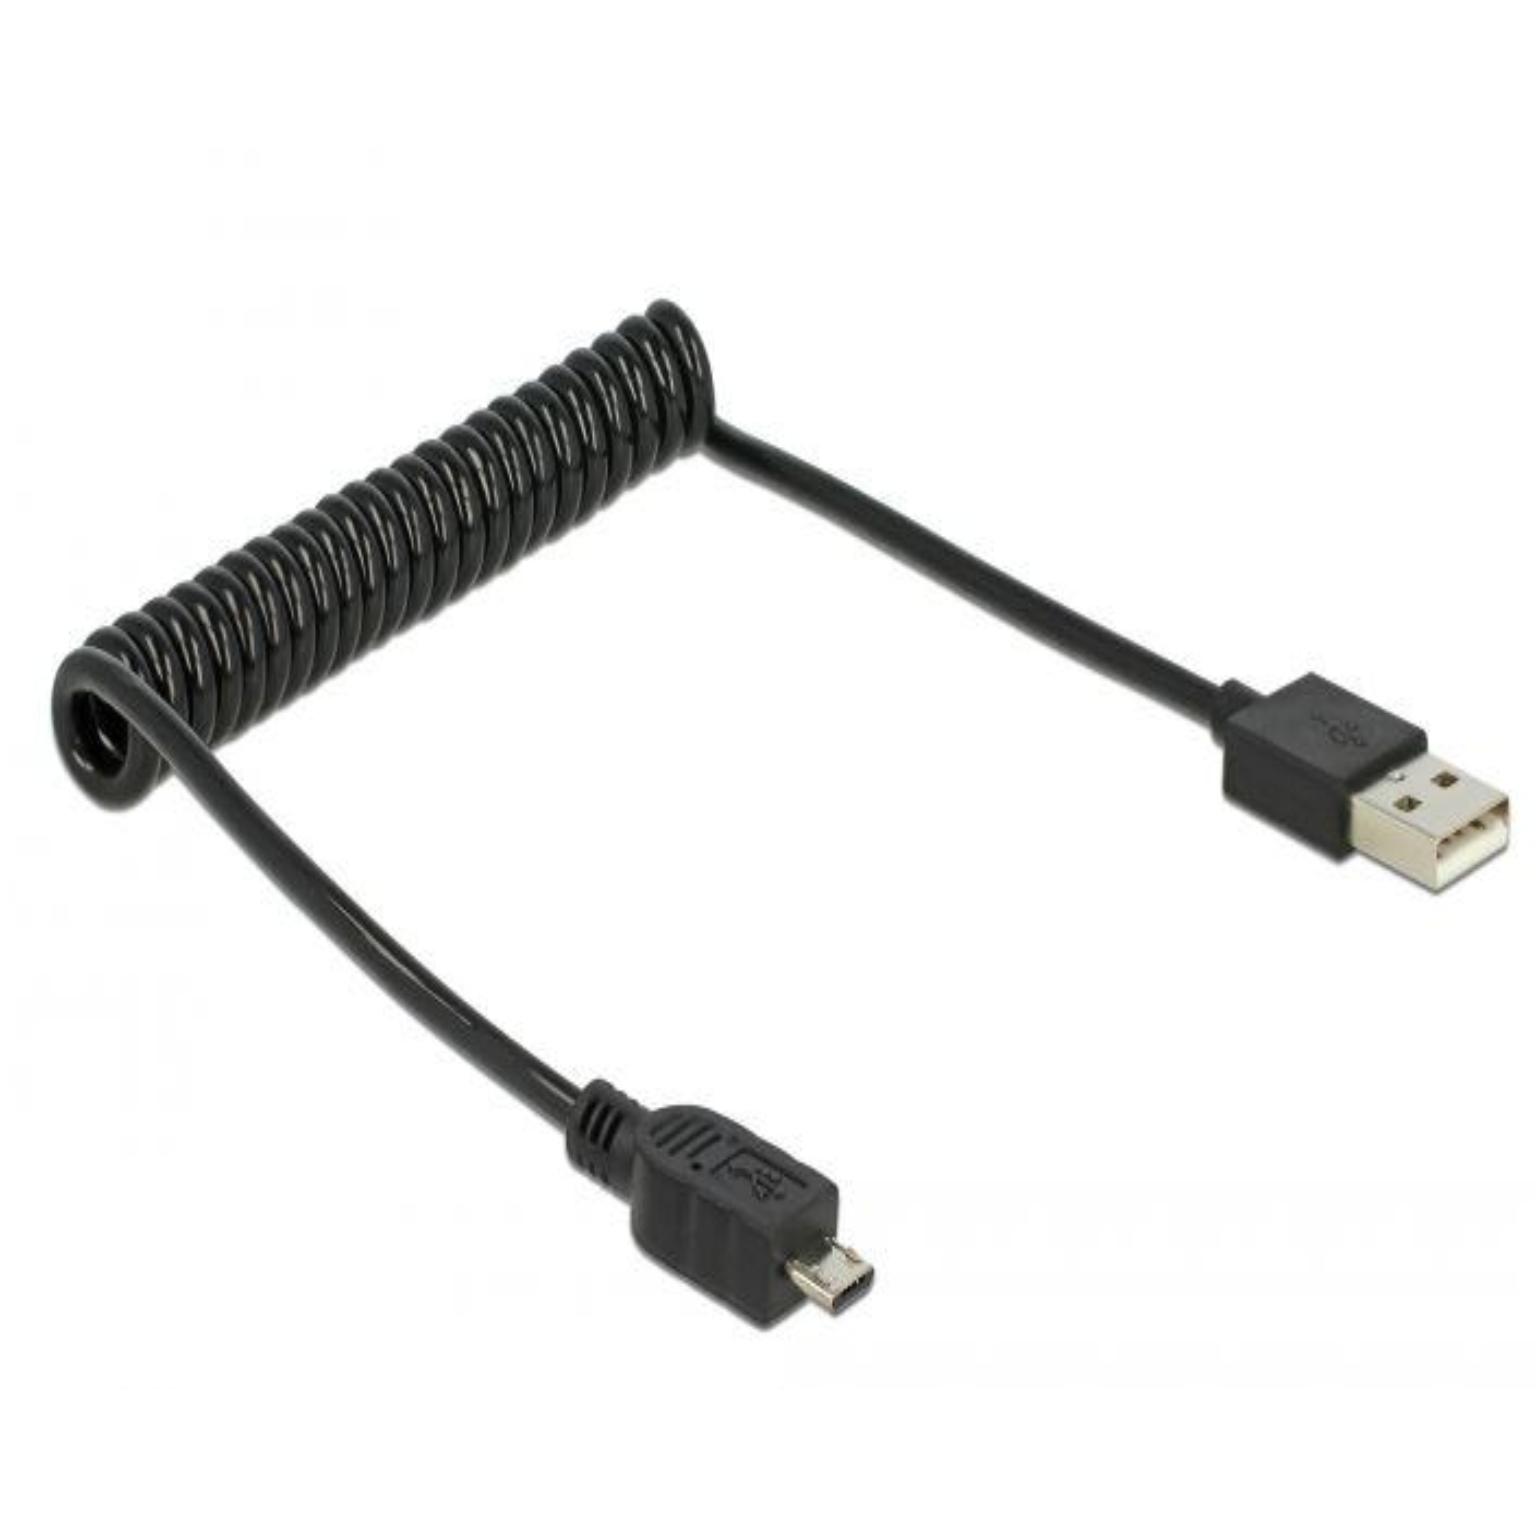 USB Micro B datakabel - 0.3 meter - Delock